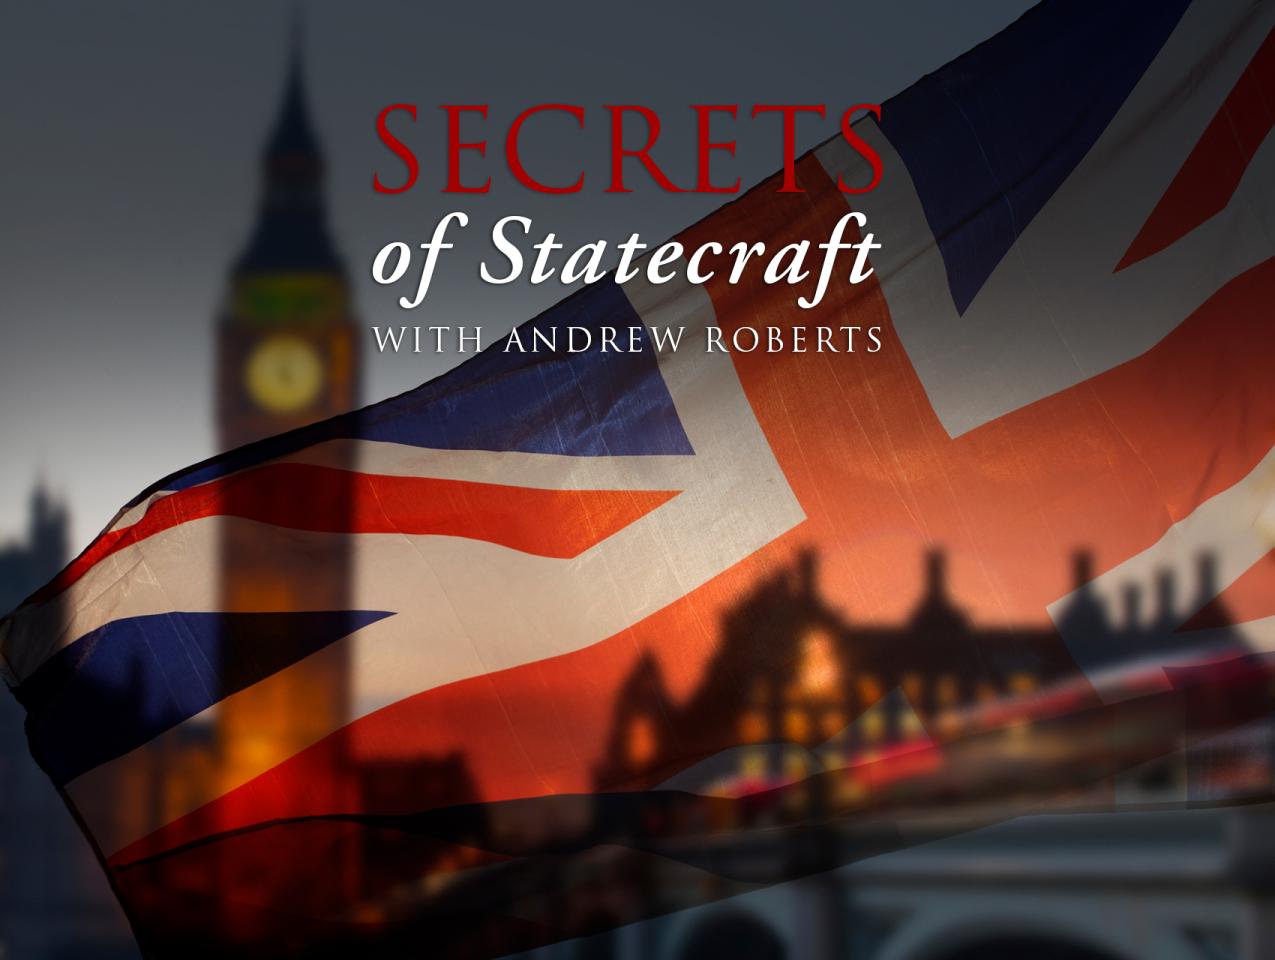 Secrets-Of-Statecraft_Phillips